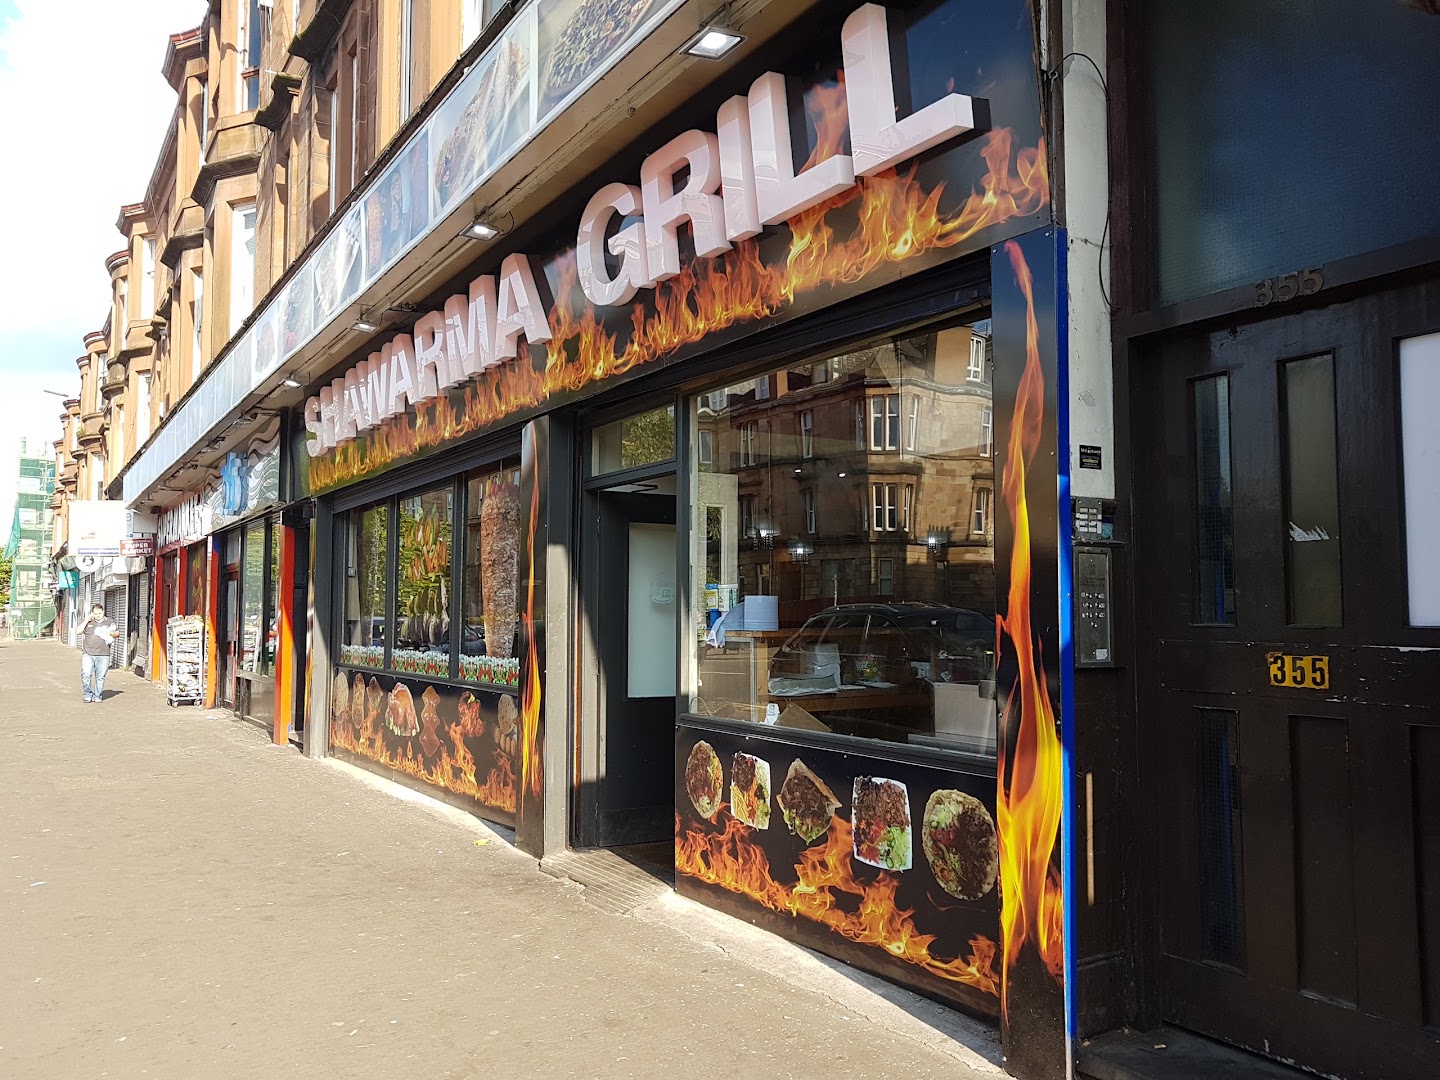 Shawarma Grill Restaurant: A Flavourful Middle Eastern Restaurant in Glasgow